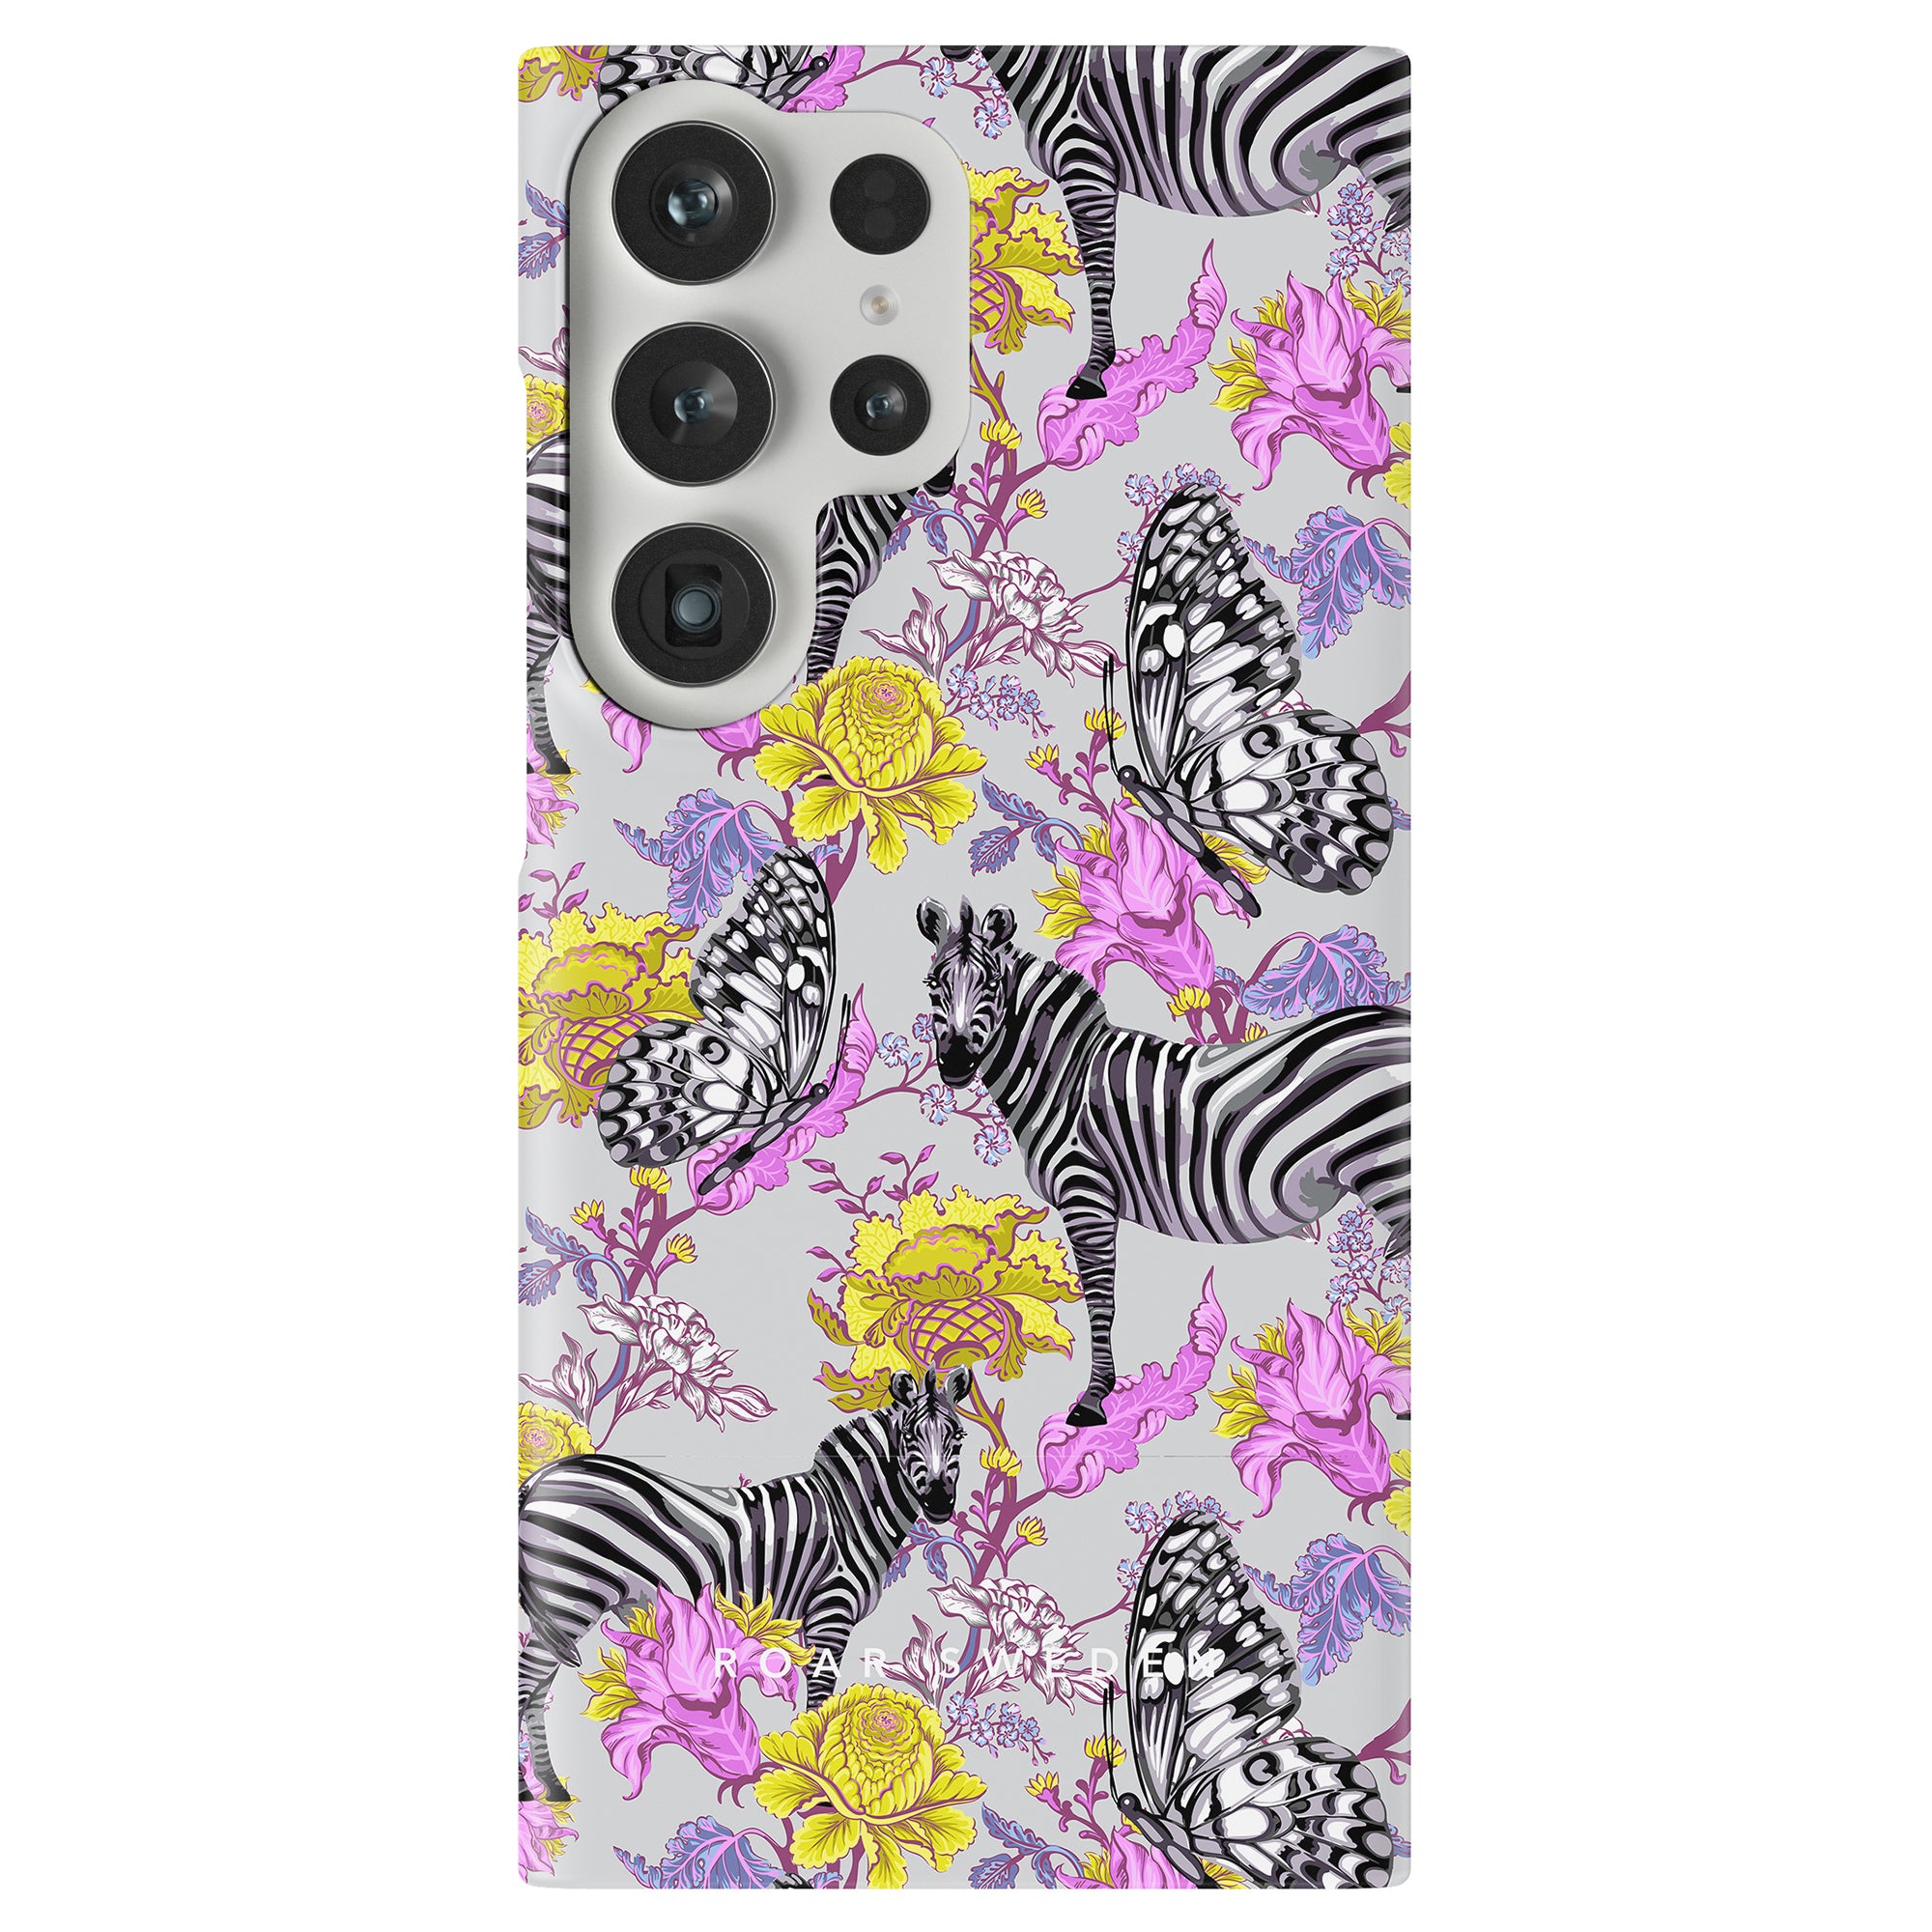 An Exotic Zebra - Slim case phone case featuring vibrant flowers.